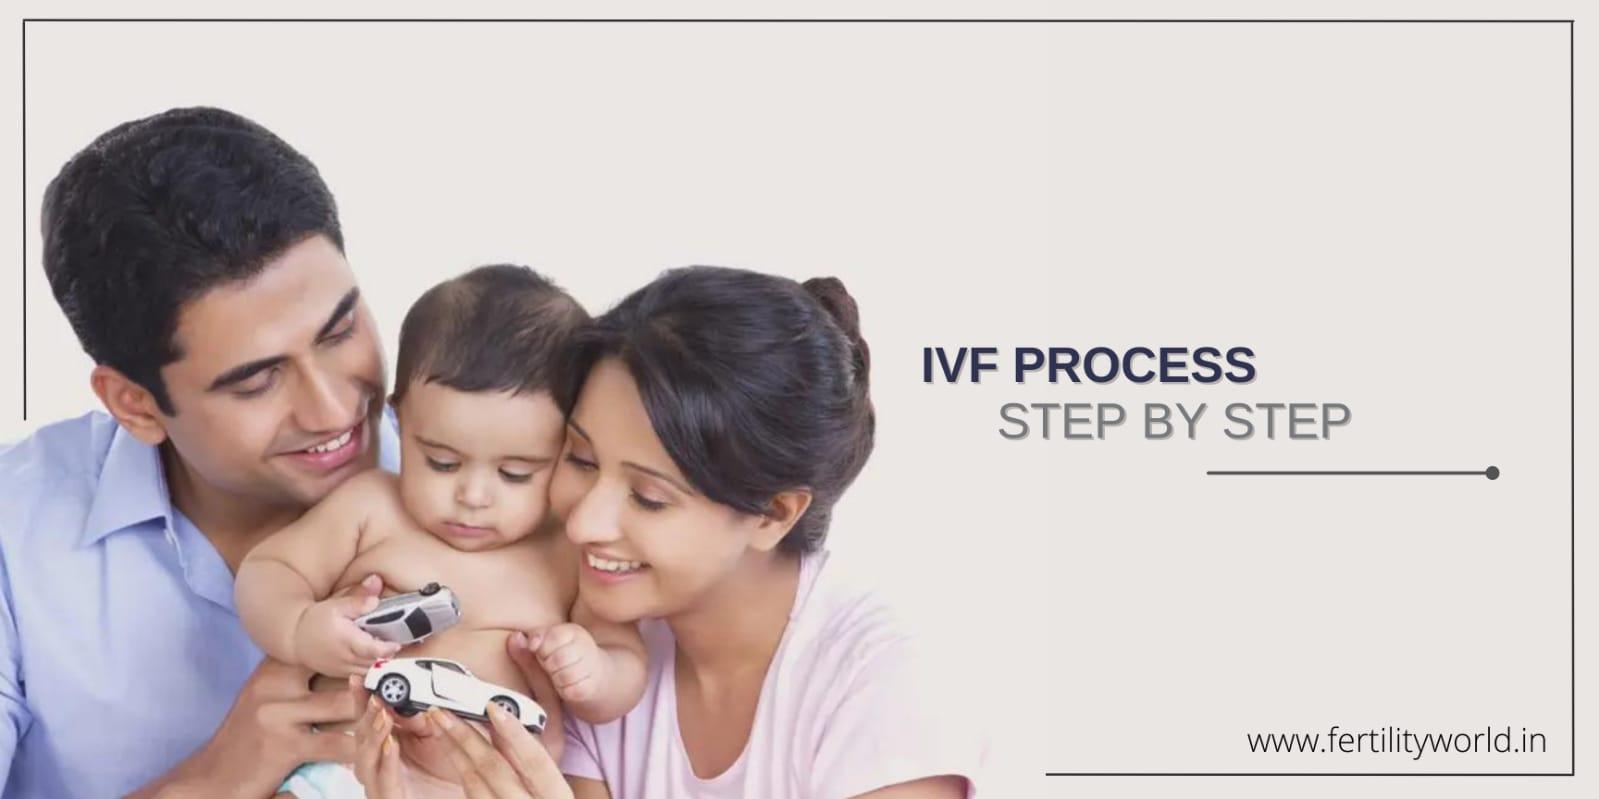 IVF PROCESS STEP BY STEP